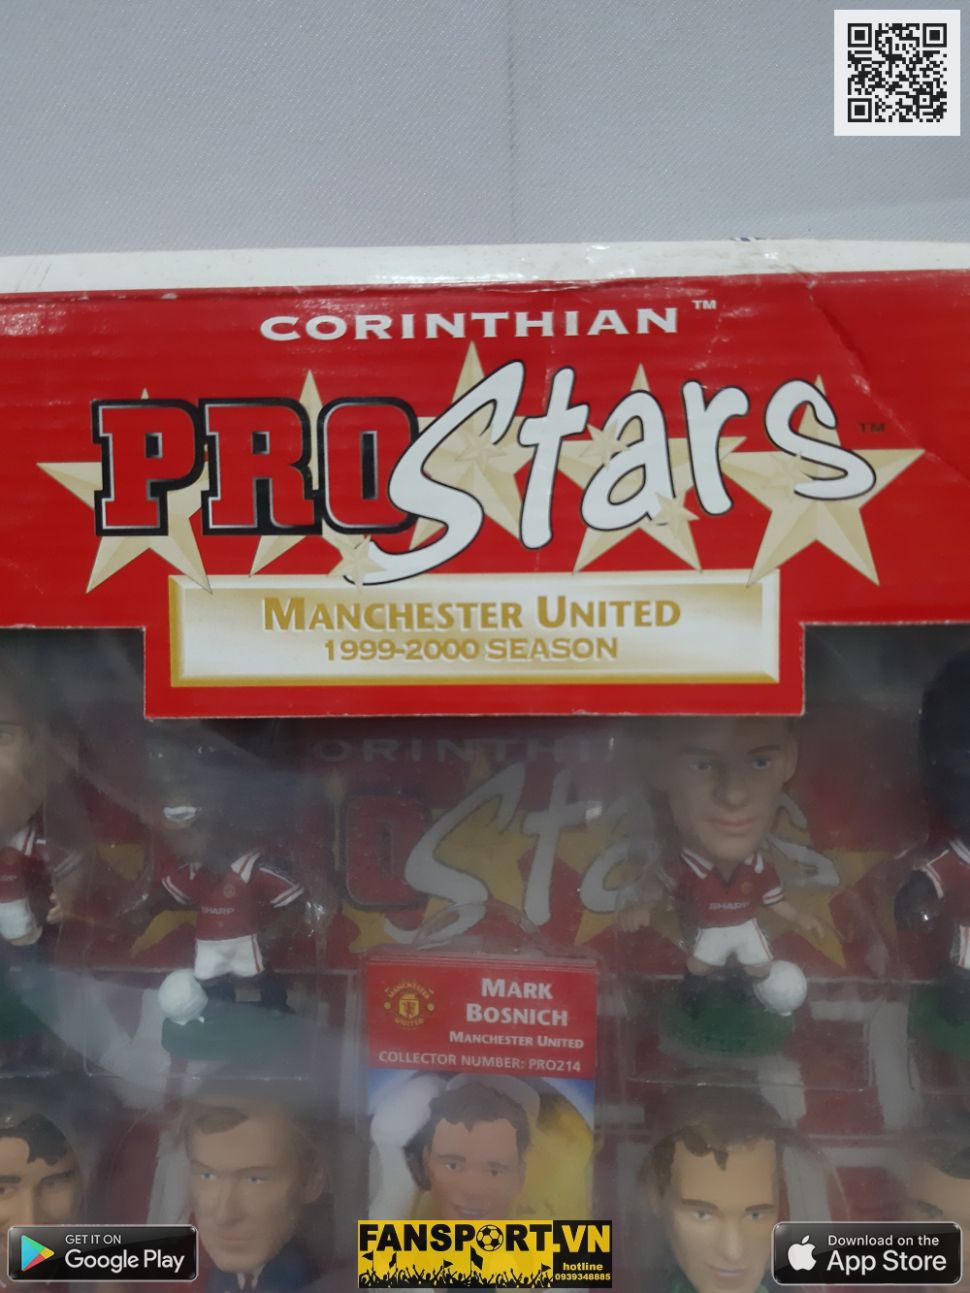 Box Manchester United 1998-1999-2000 home corinthian figure set